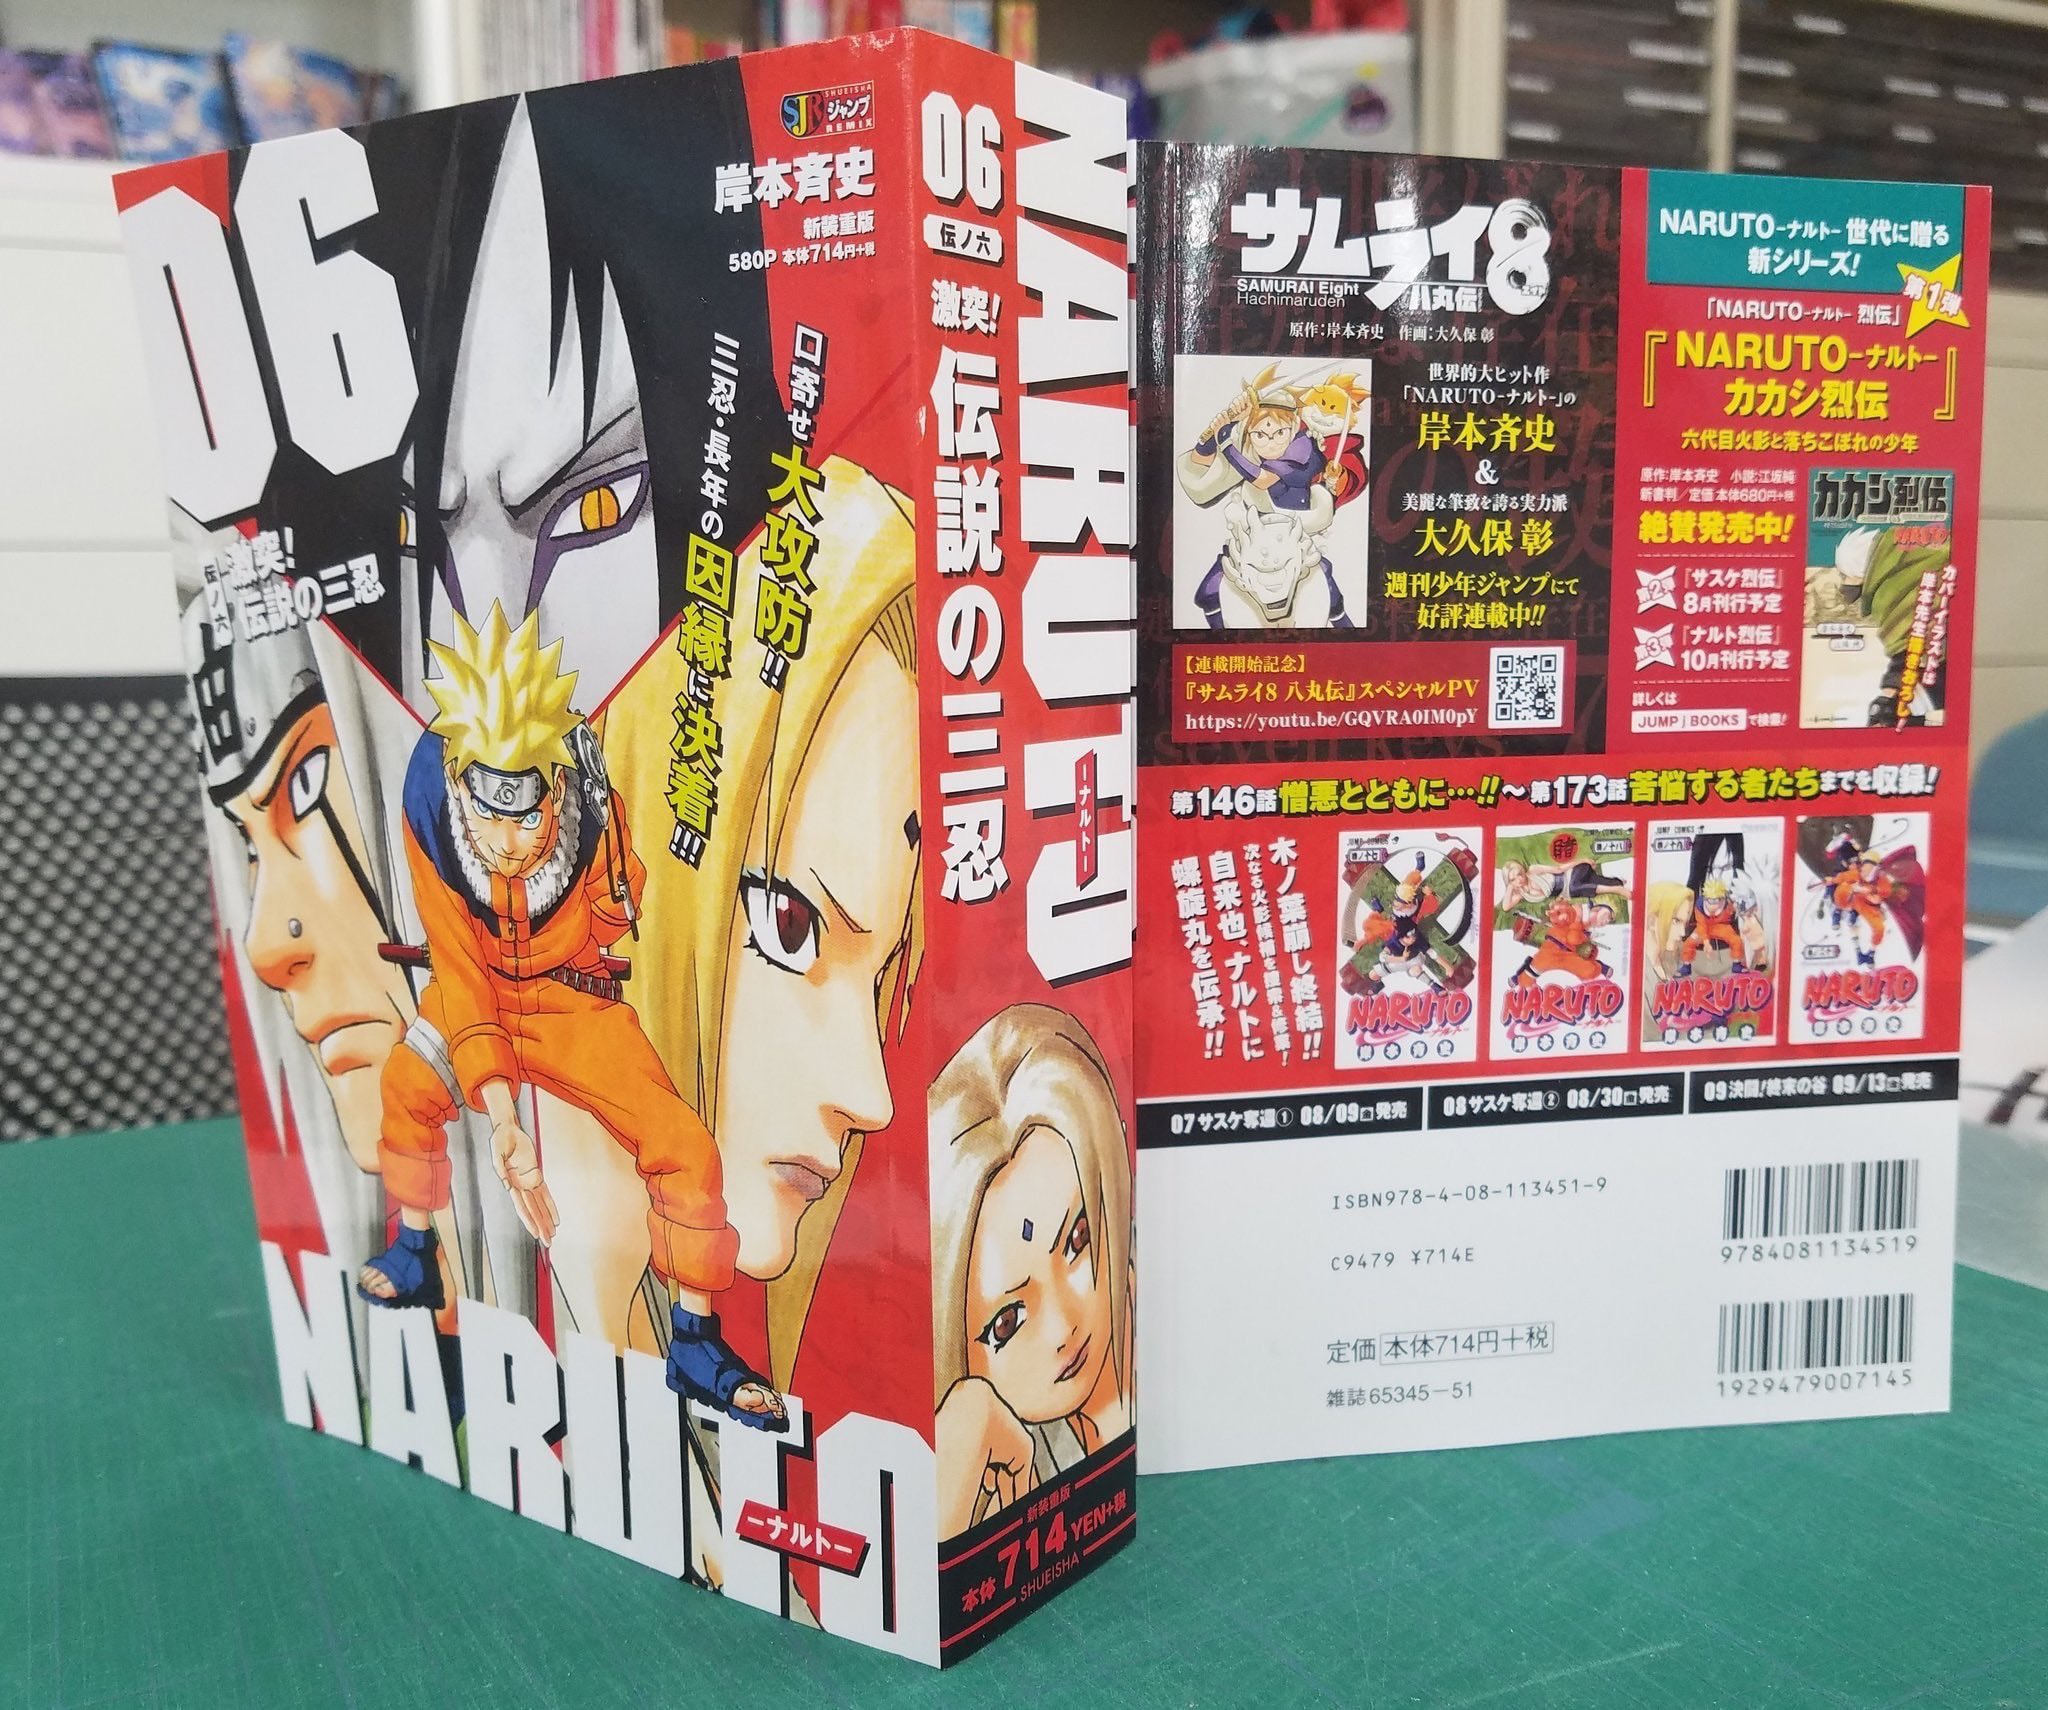 📊, Manga Plus ranking by - Naruto - Spiralling Sphere